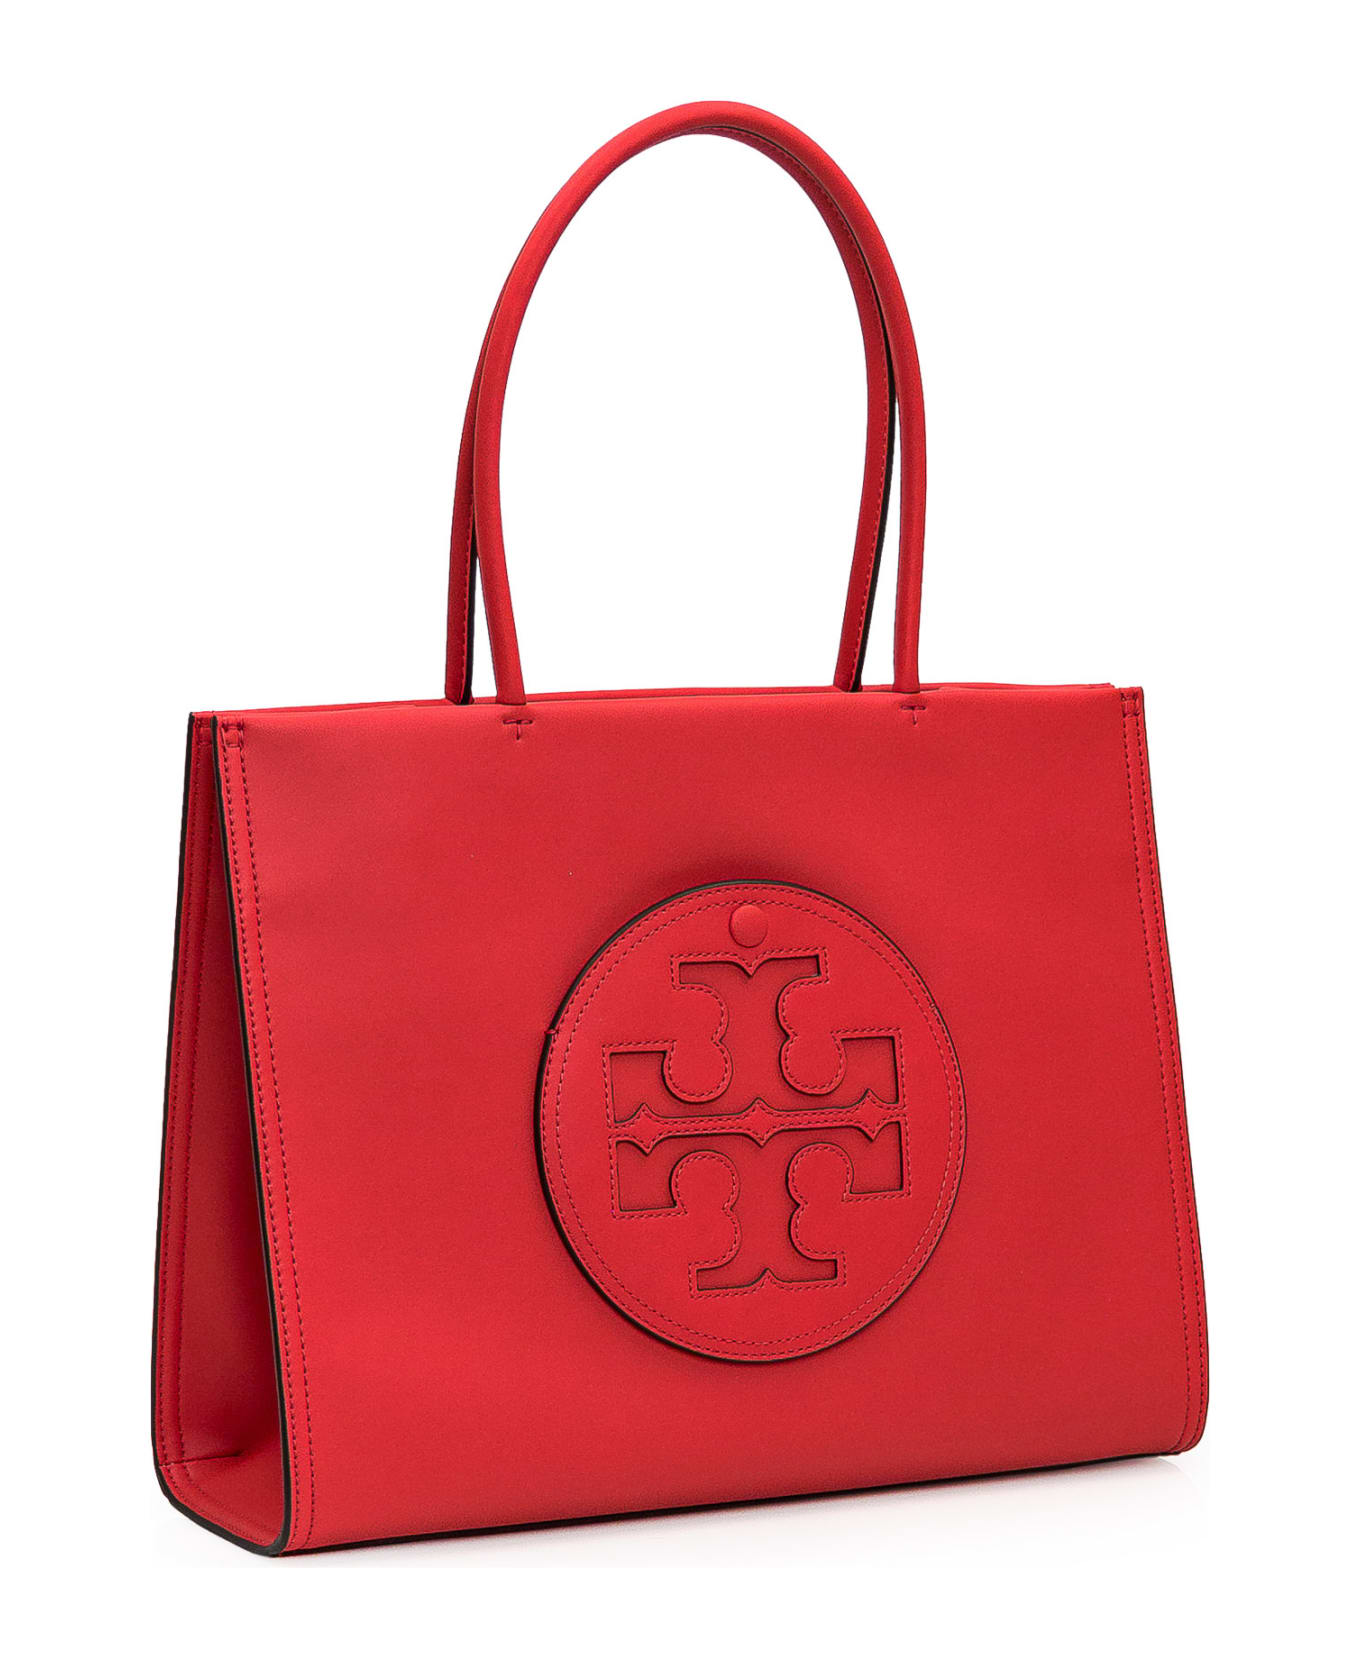 Tory Burch Shopping Bag Ella - POPPY RED